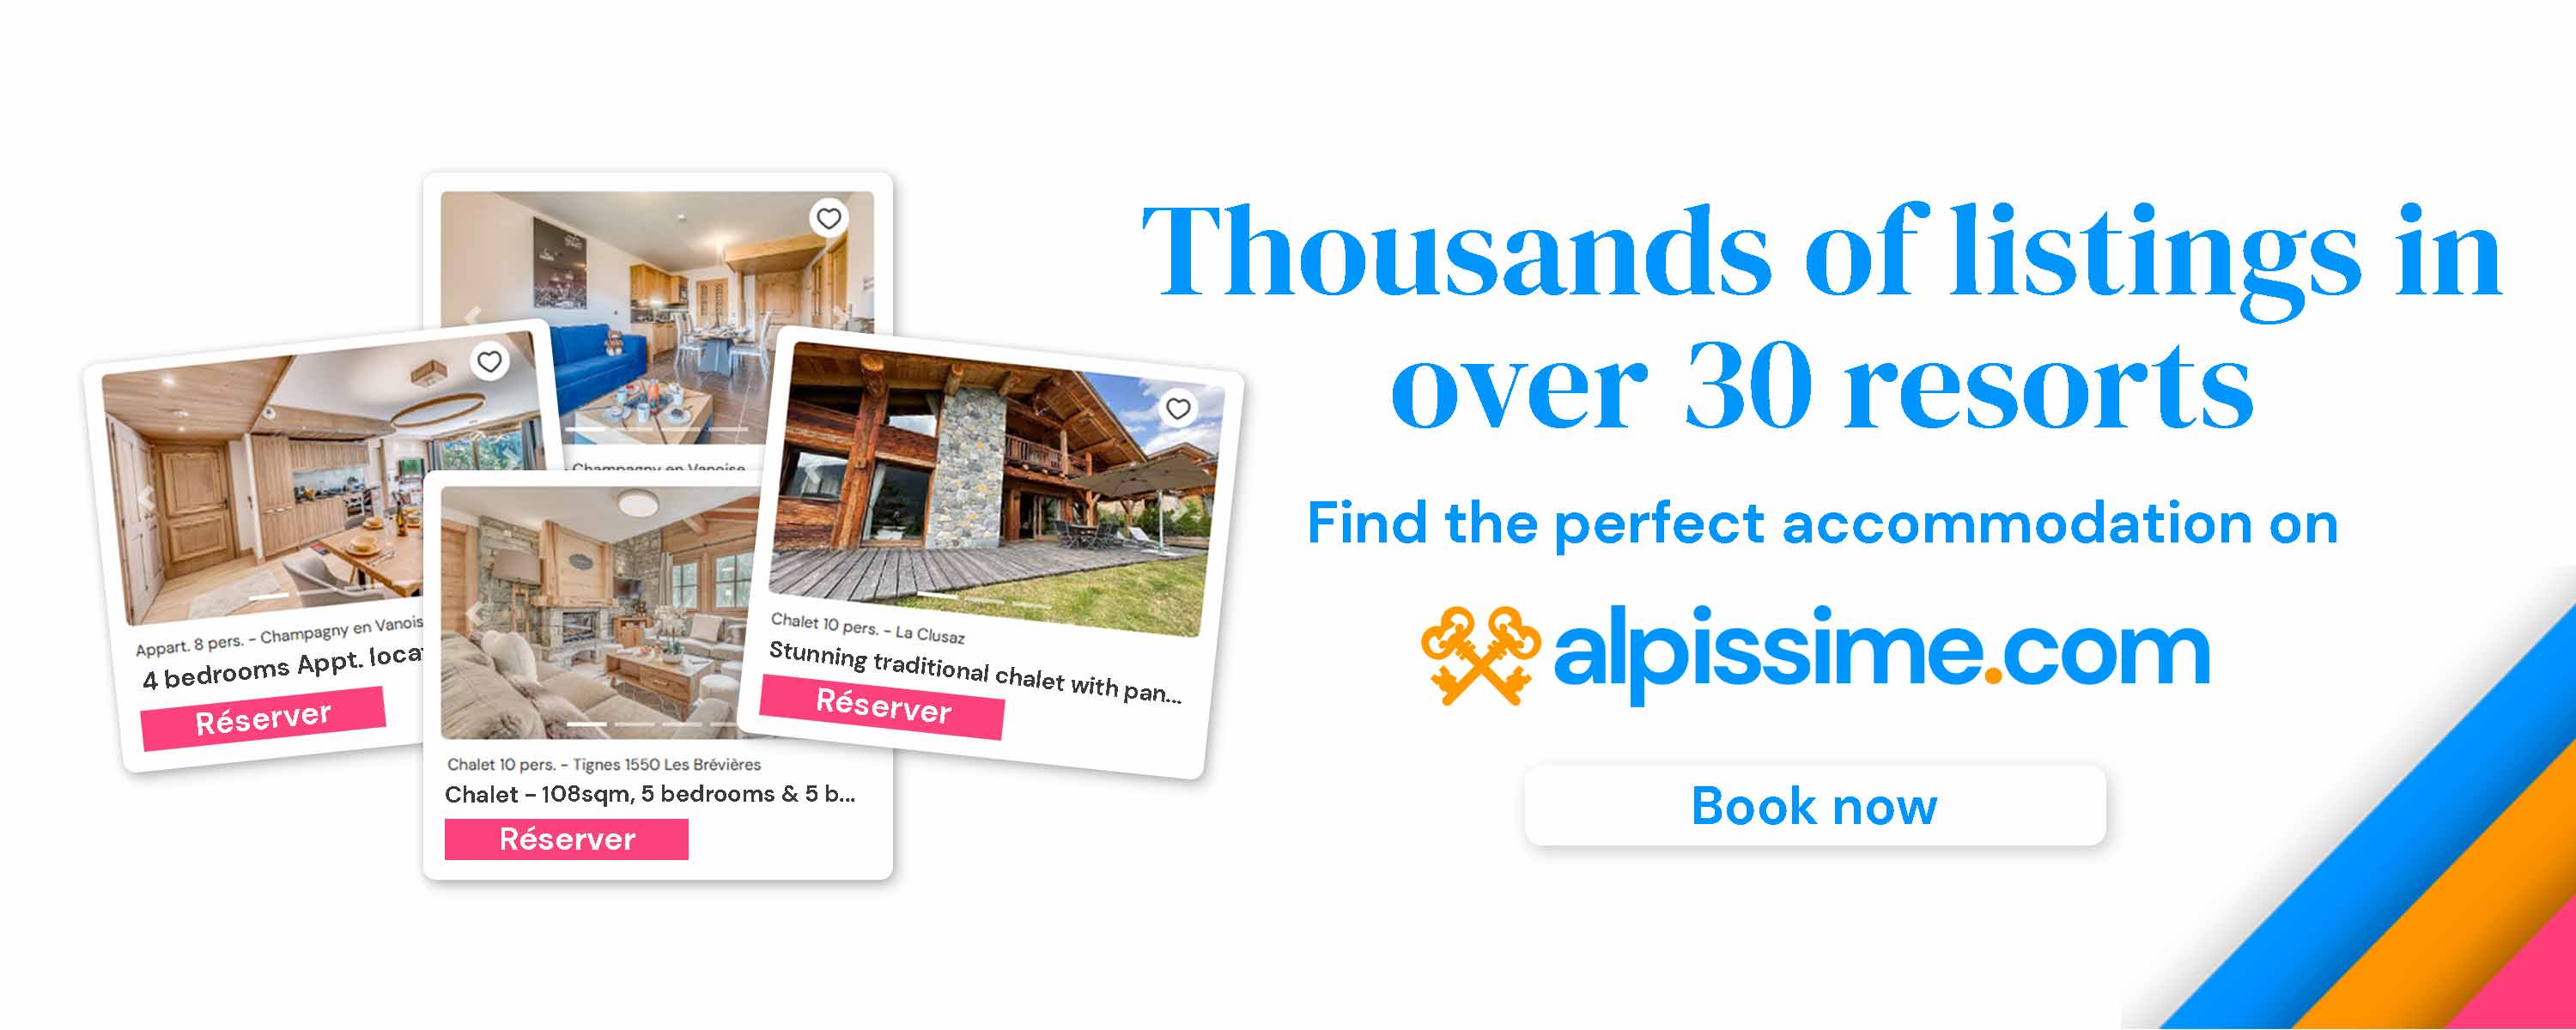 Ski vacation rentals with Alpissime ski trip accommodation rentals with alpissime